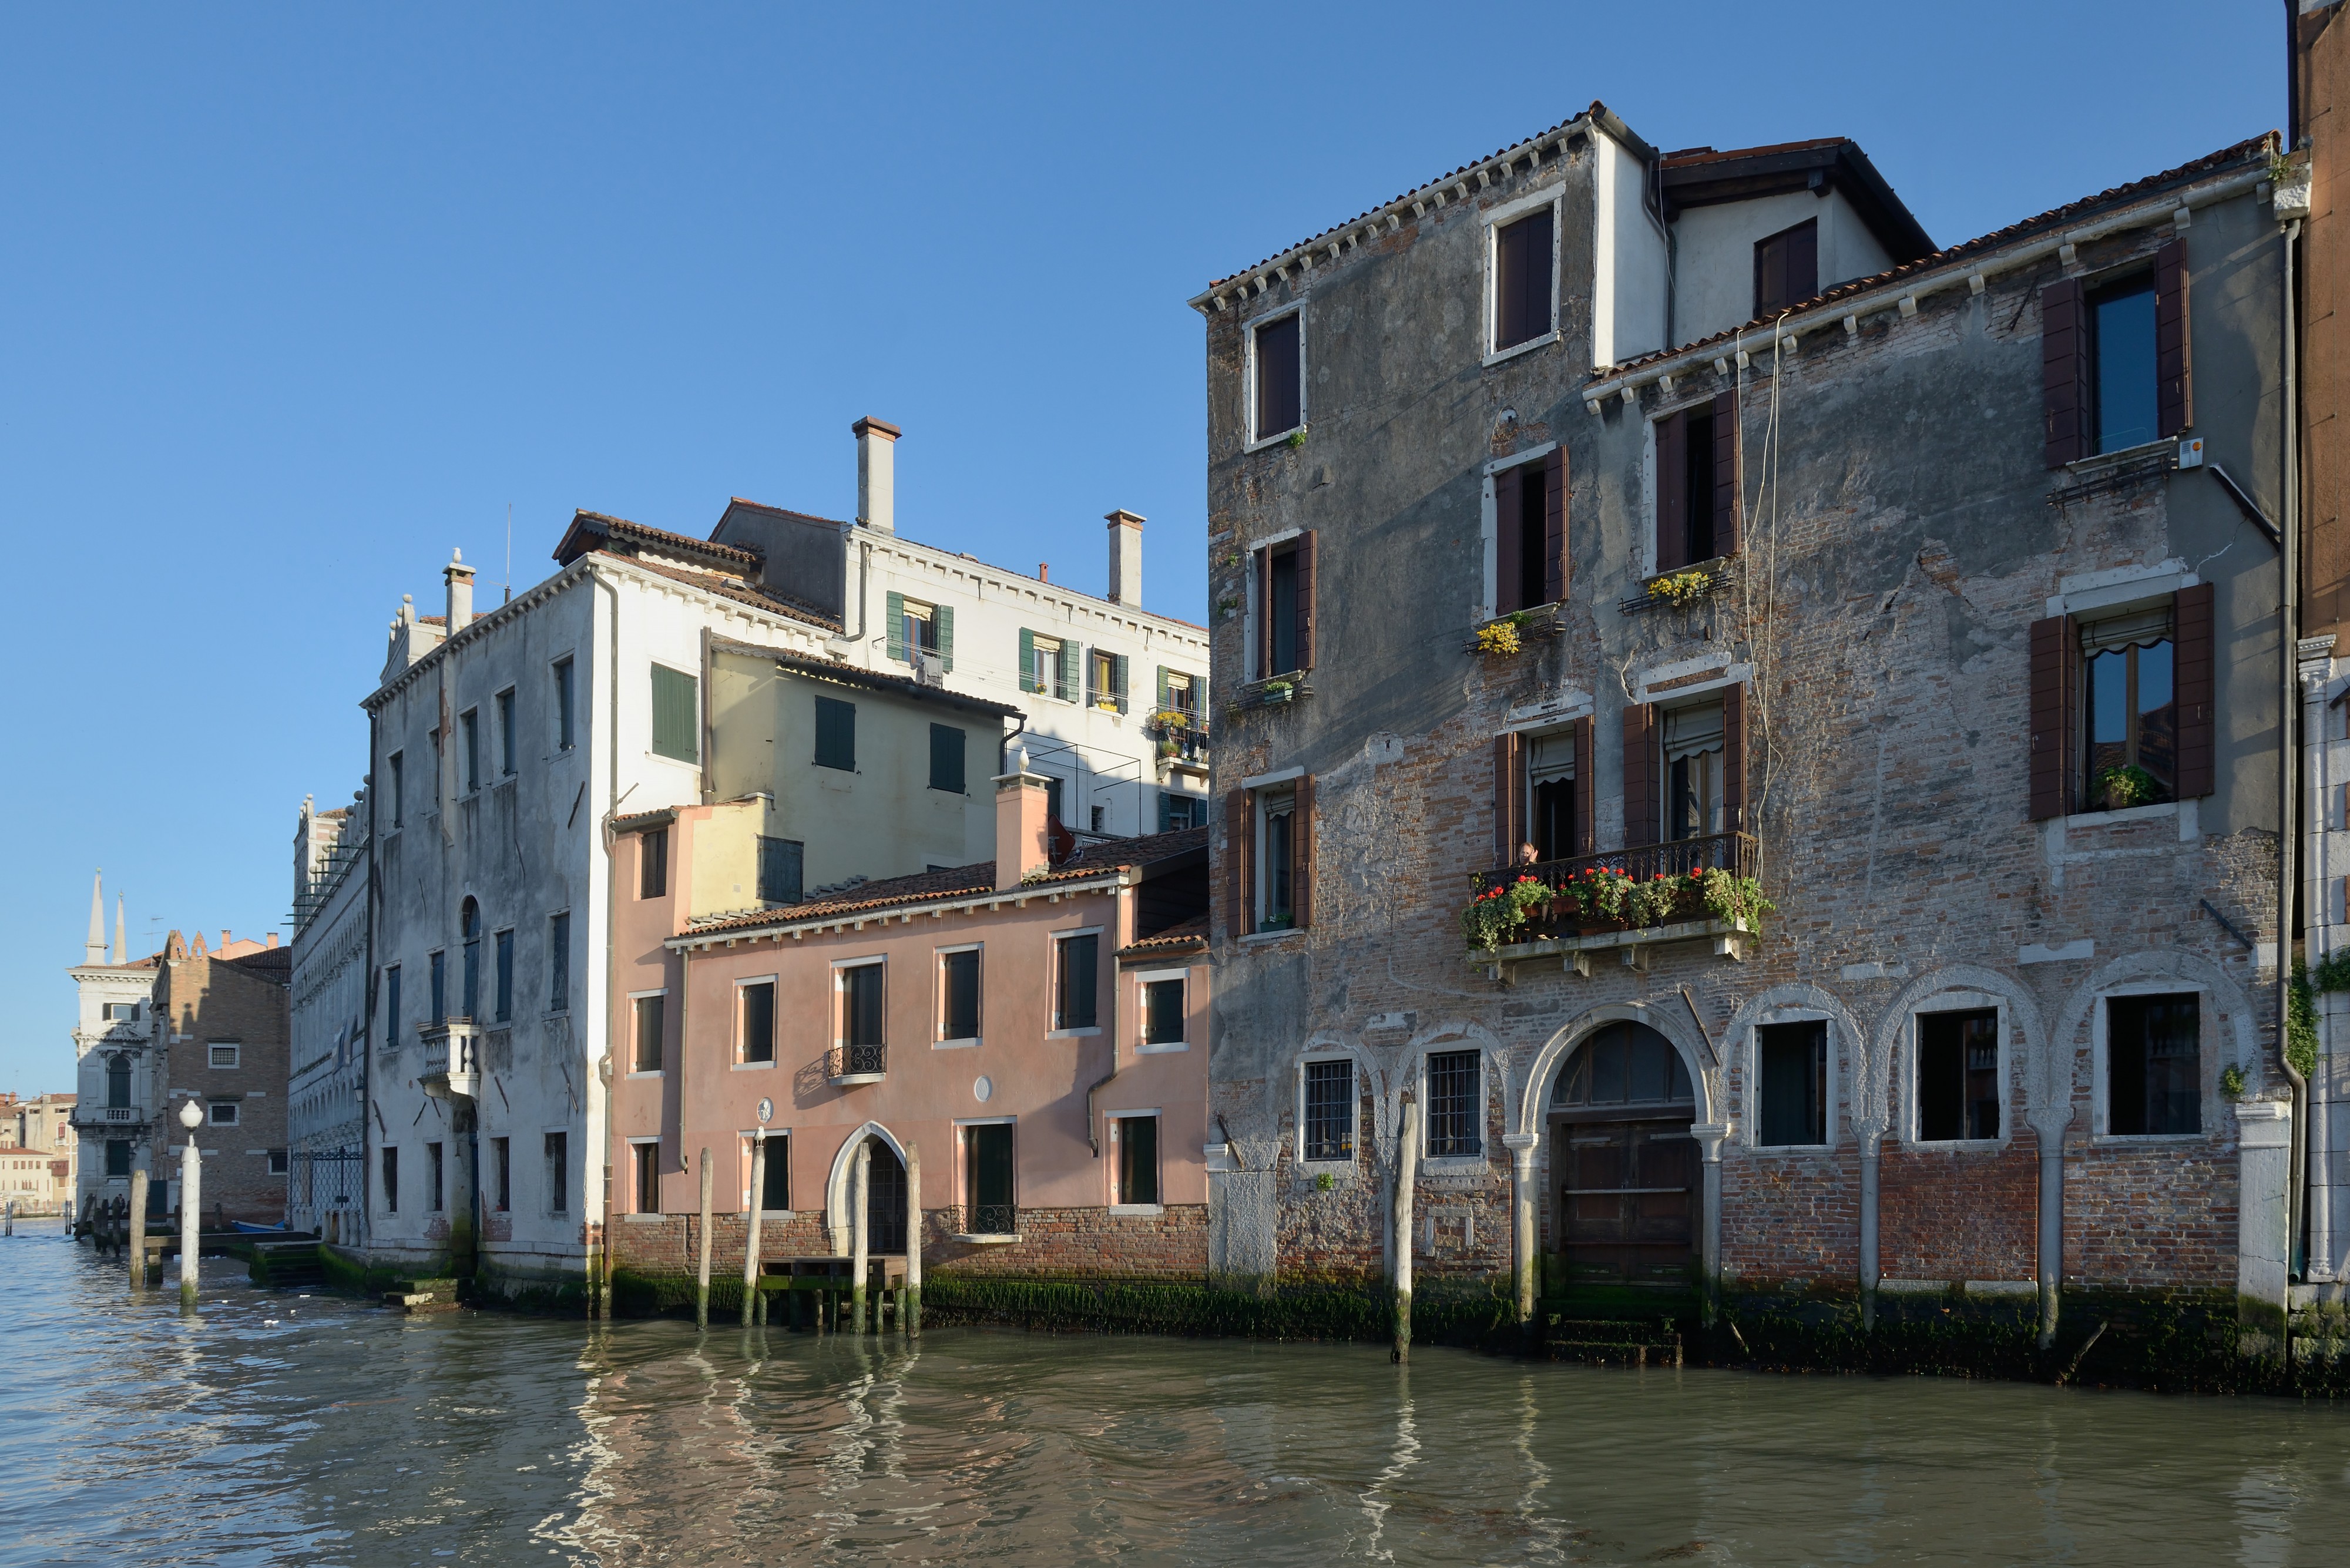 Casa Correr Canal Grande Santa Croce Venezia